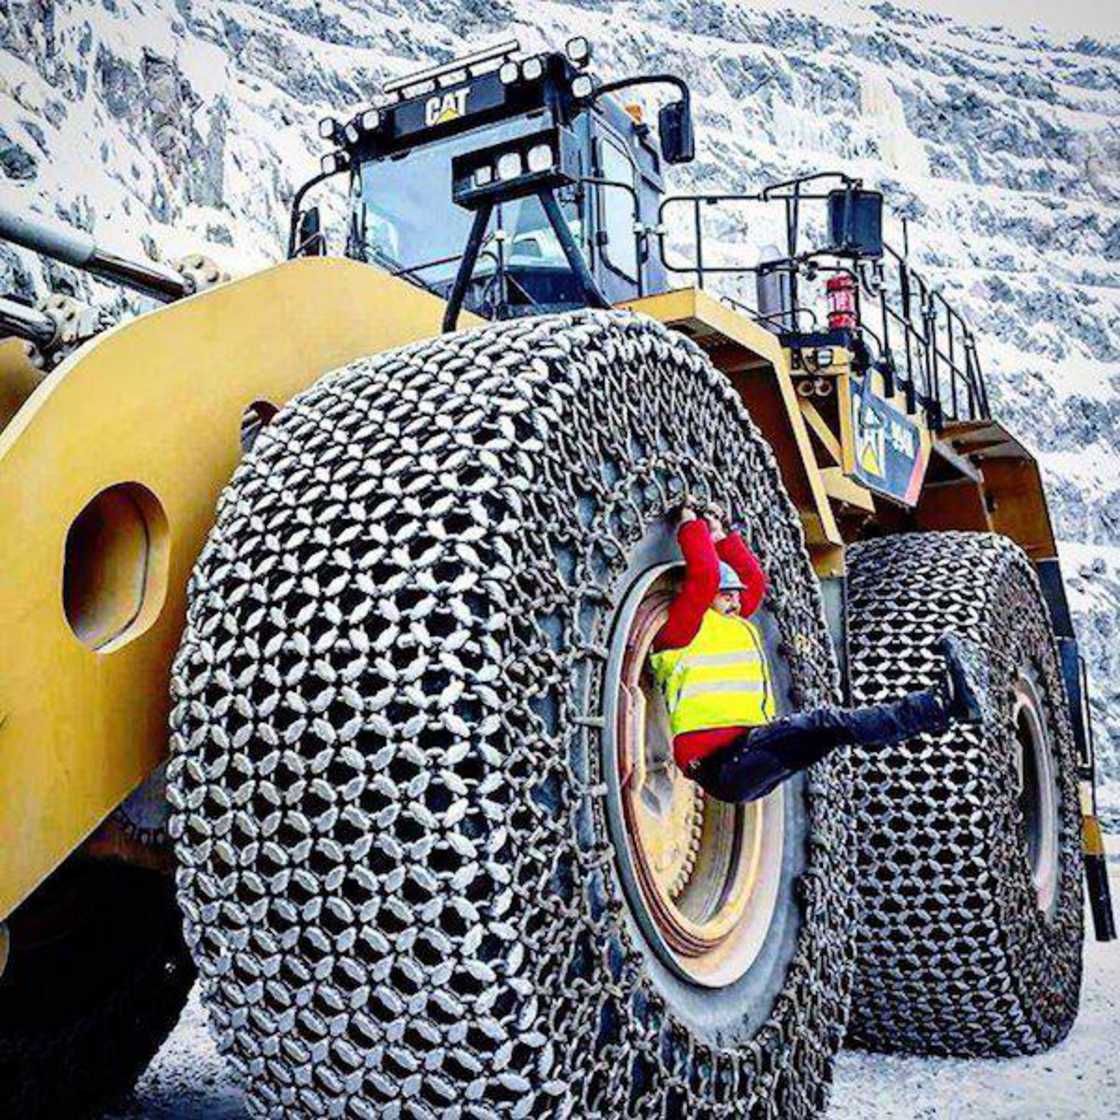 giant snow tires - Pat Co